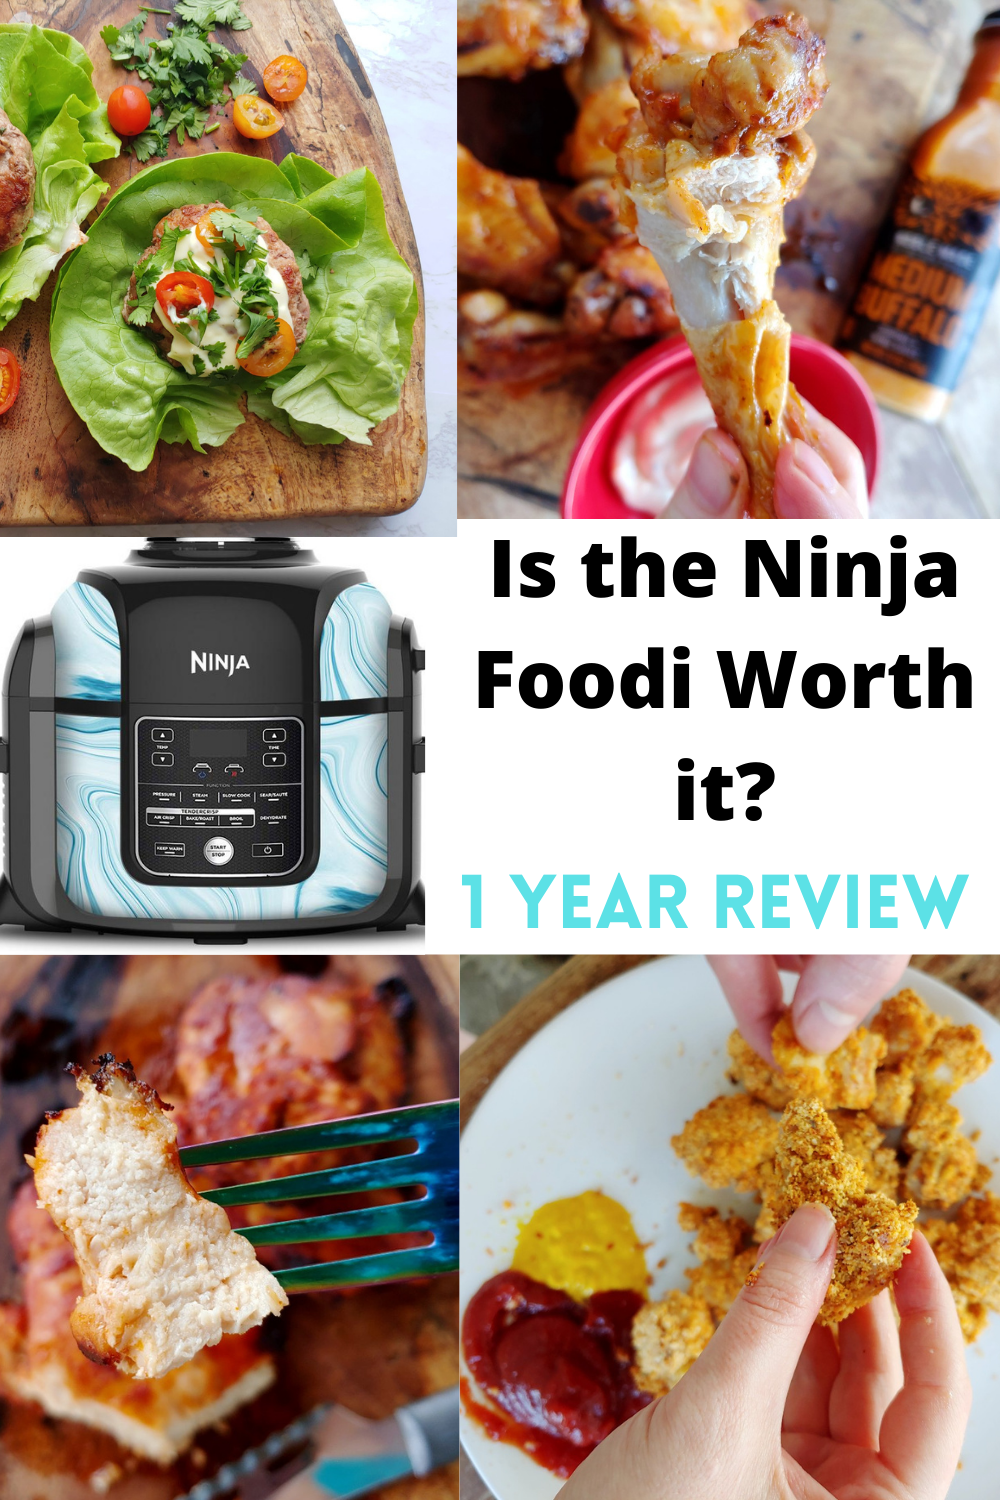 My Personal Review of the Ninja Foodi 